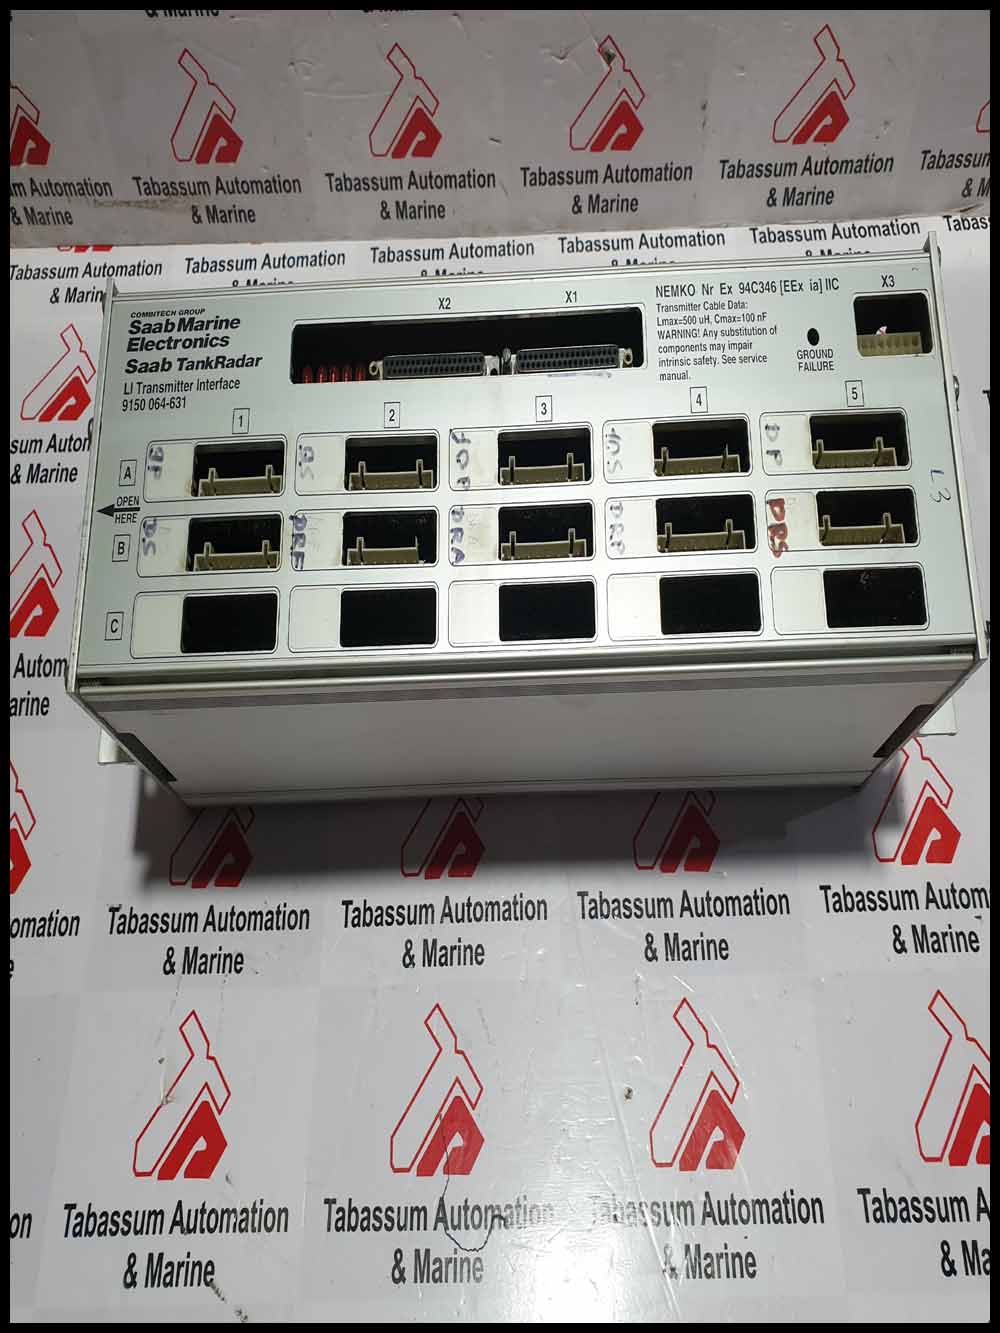 SAAB MARINE ELECTRONICS SAAB TANKRADAR 9150 064-631 LI TRANSMITTER INTERFACE